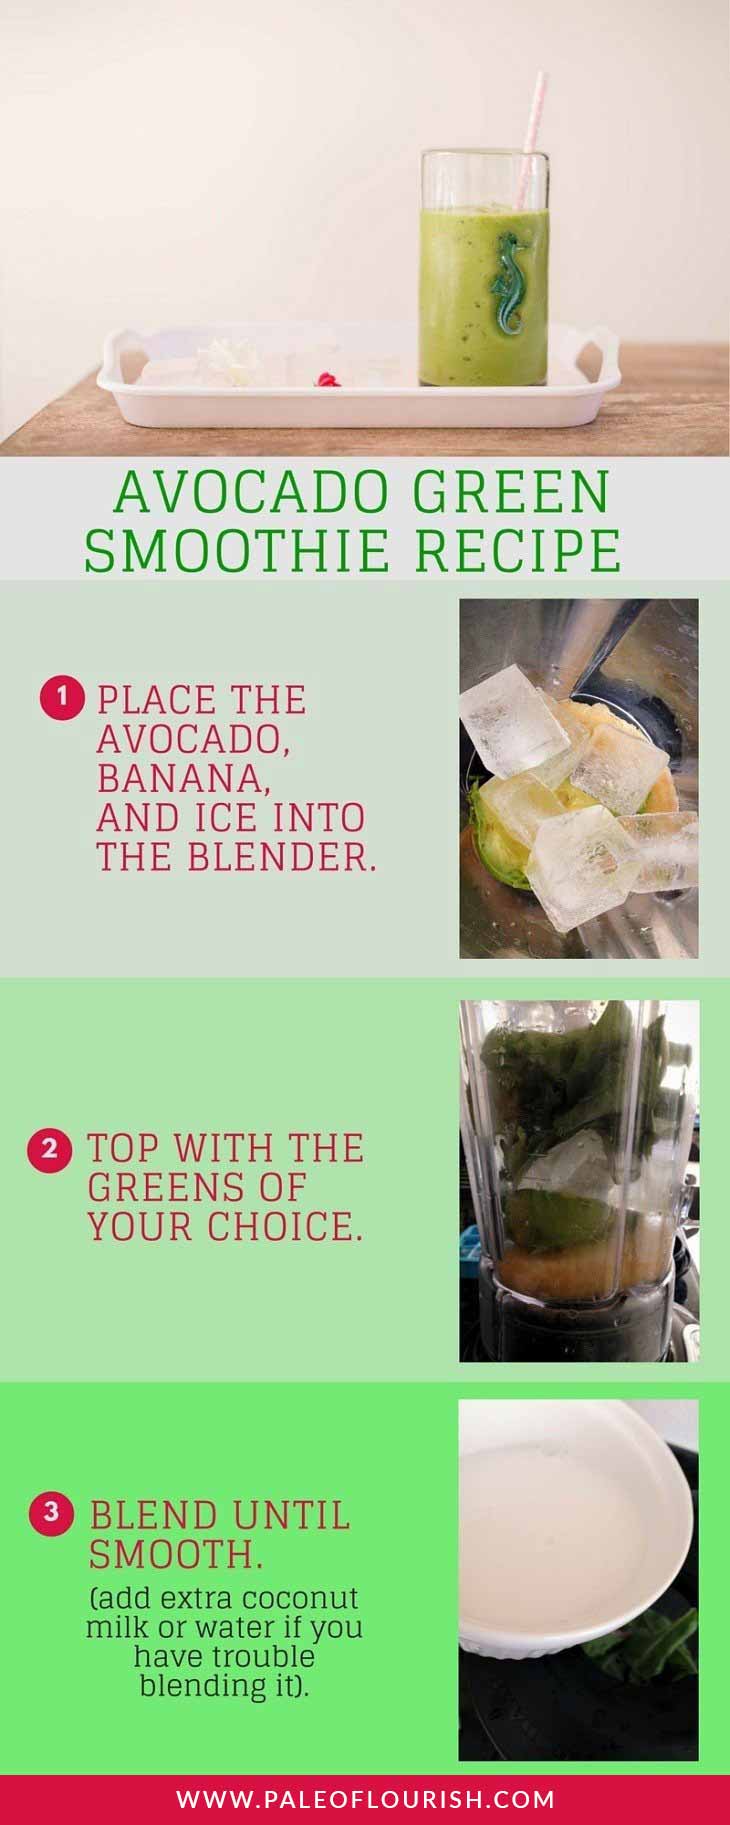 Avocado Green Smoothie Recipe [AIP, Paleo, Dairy-Free] #paleo #recipes #gluten-free https://paleoflourish.com/avocado-green-smoothie-recipe-aip-paleo-dairy-free